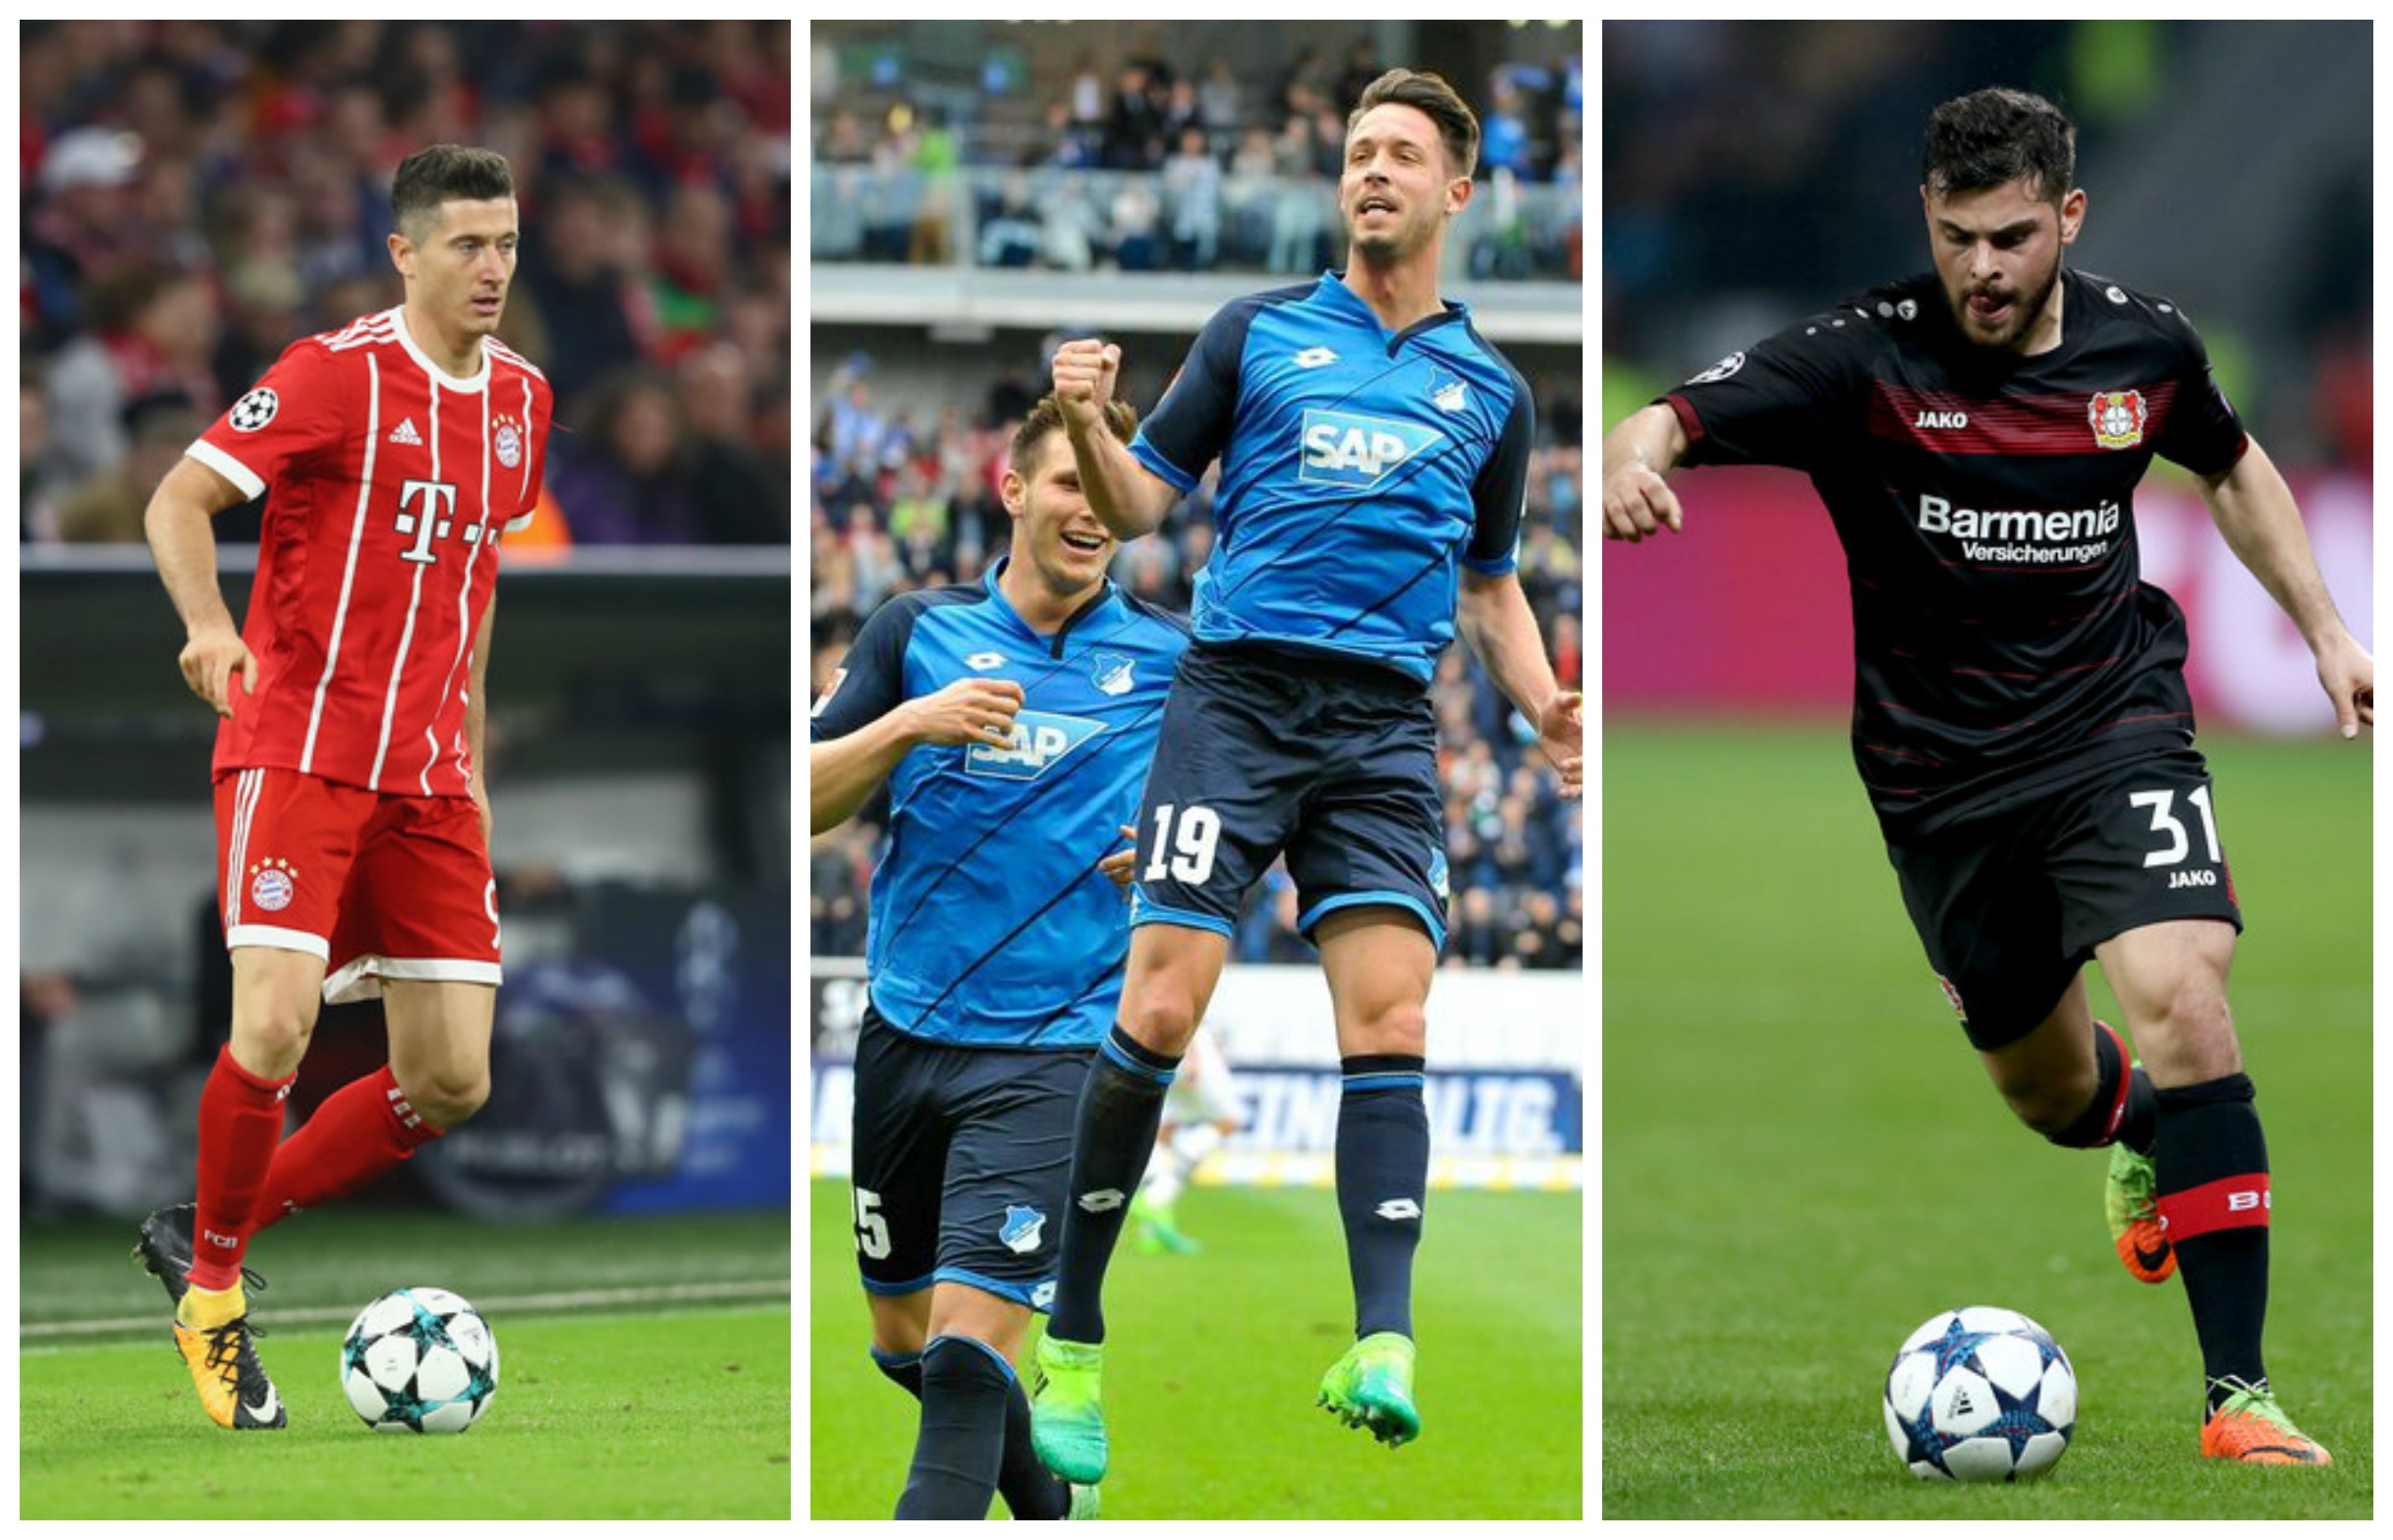 Top 3 Scorers of the 2017-18 Bundesliga